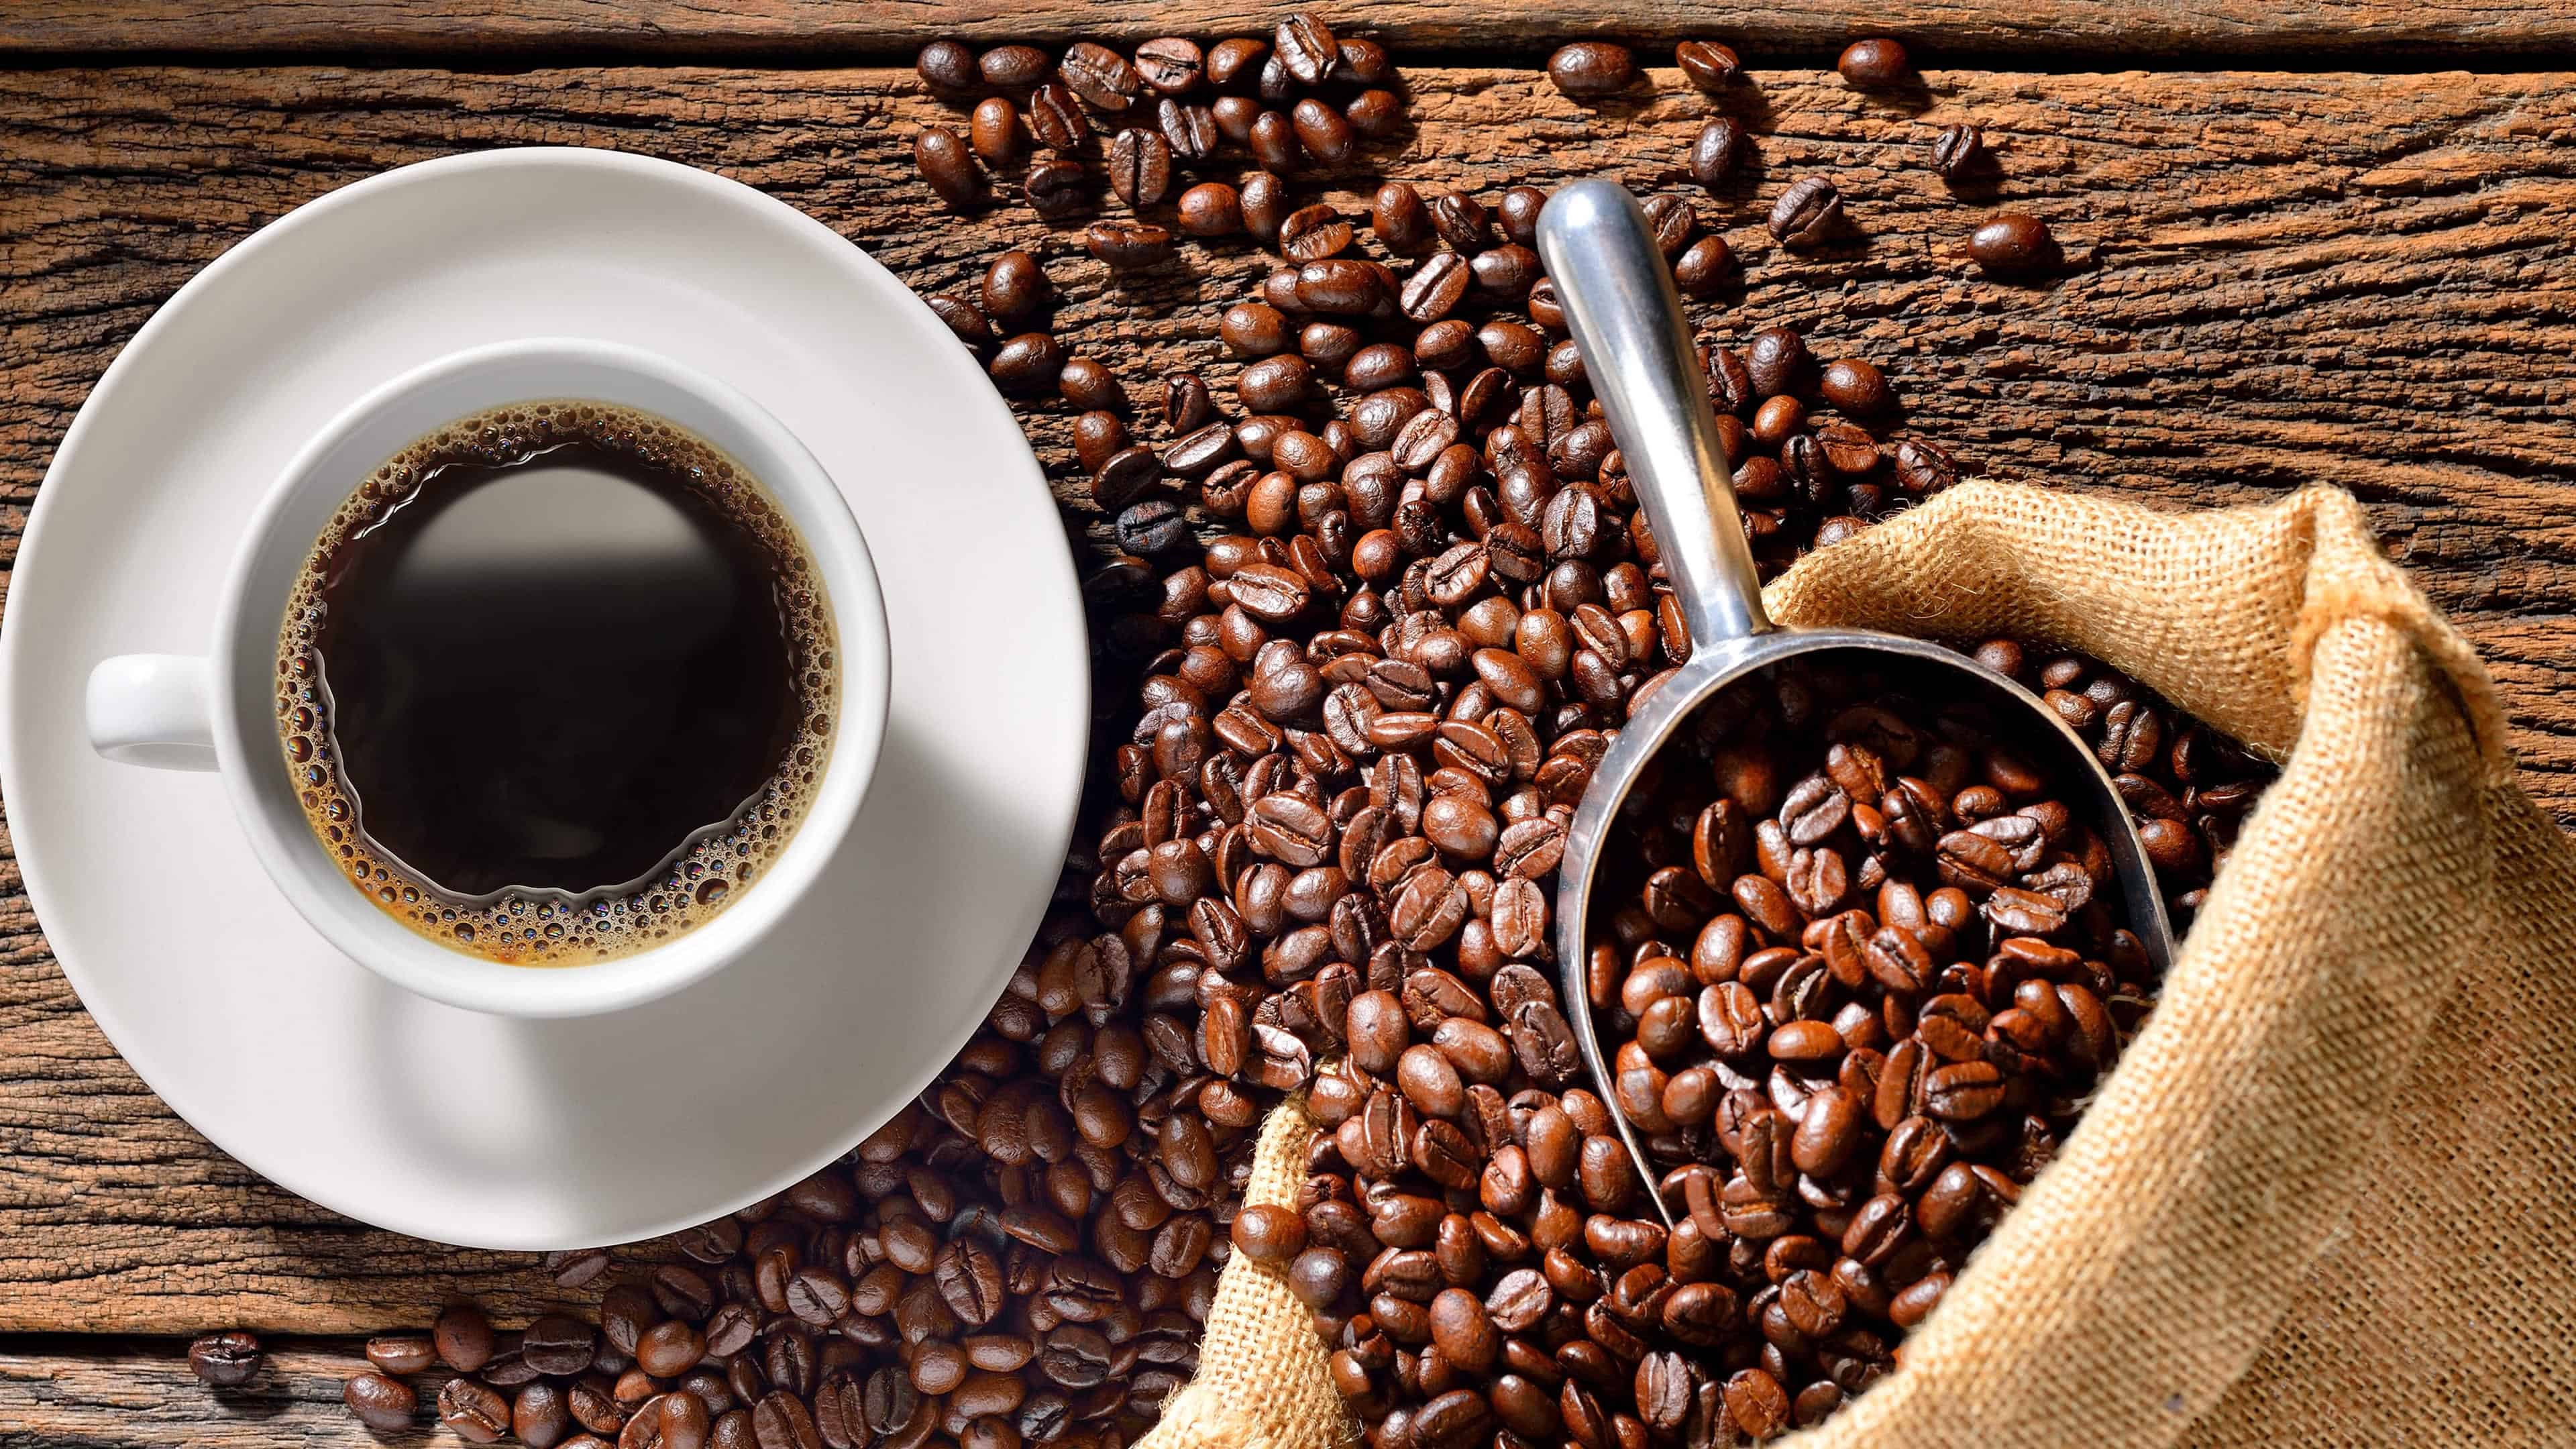 Coffee 4K wallpapers, Rich flavor, Dark roasted beans, Morning pick-me-up, 3840x2160 4K Desktop